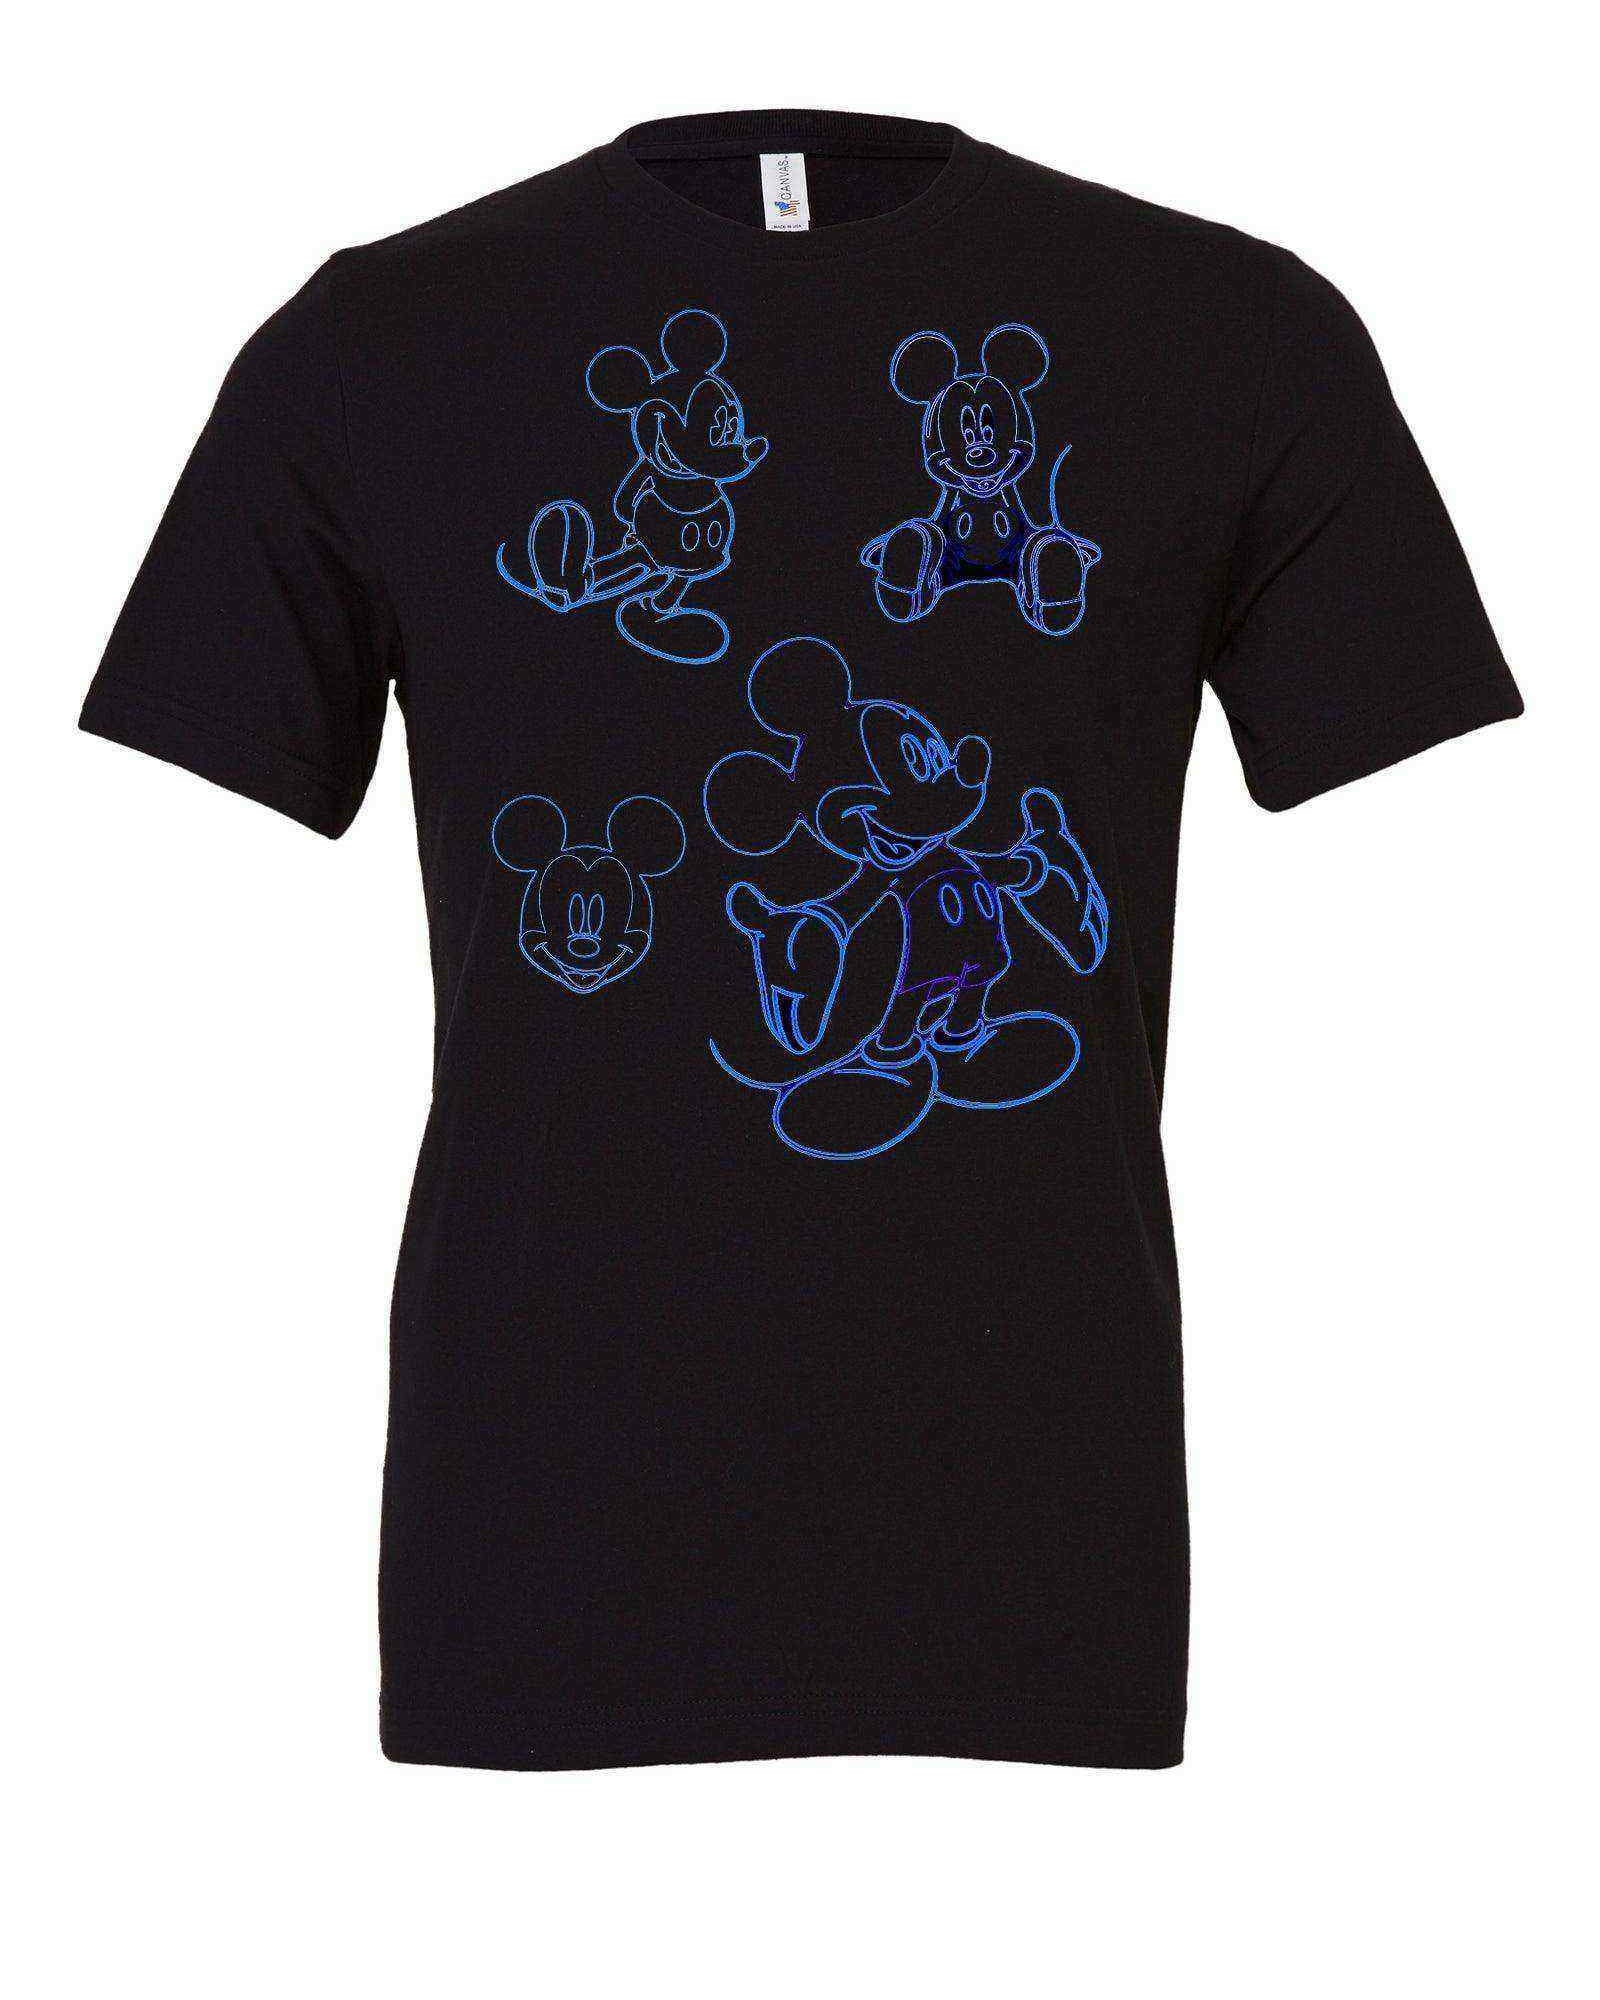 Blue Neon Mickey Shirt | Tron Mickey Shirt | Tomorrowland Mickeys Shirt - Dylan's Tees